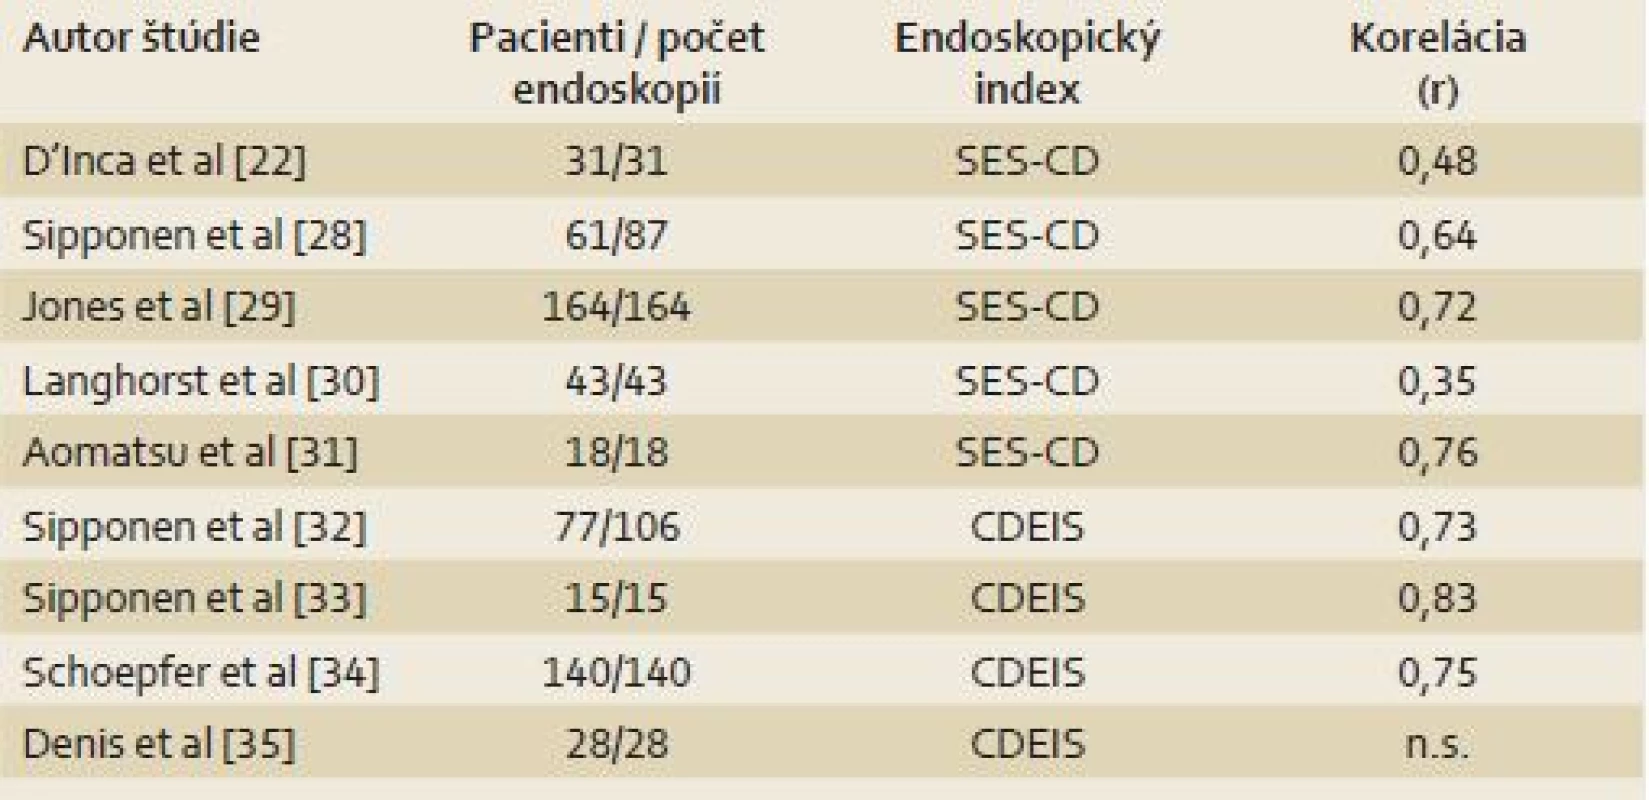 Korelácia fekálneho kalprotektínu s endoskopickým nálezom – CD.
Tab. 2. Correlation of fecal calprotectin with endoscopic findings – CD.